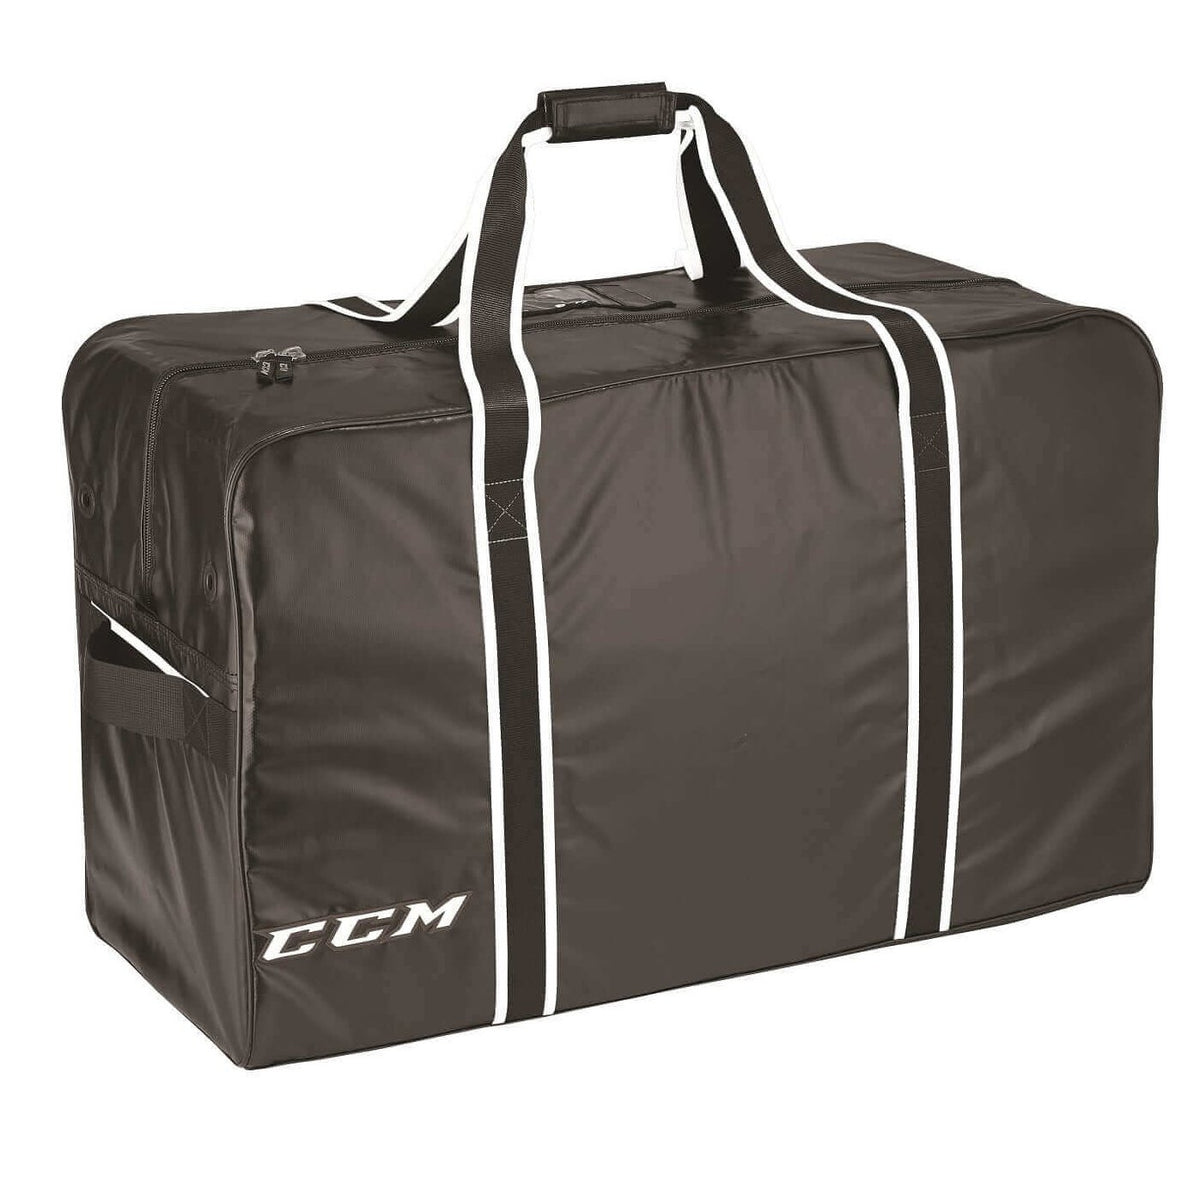 CCM Pro Team 32" Black/White Carry Bag